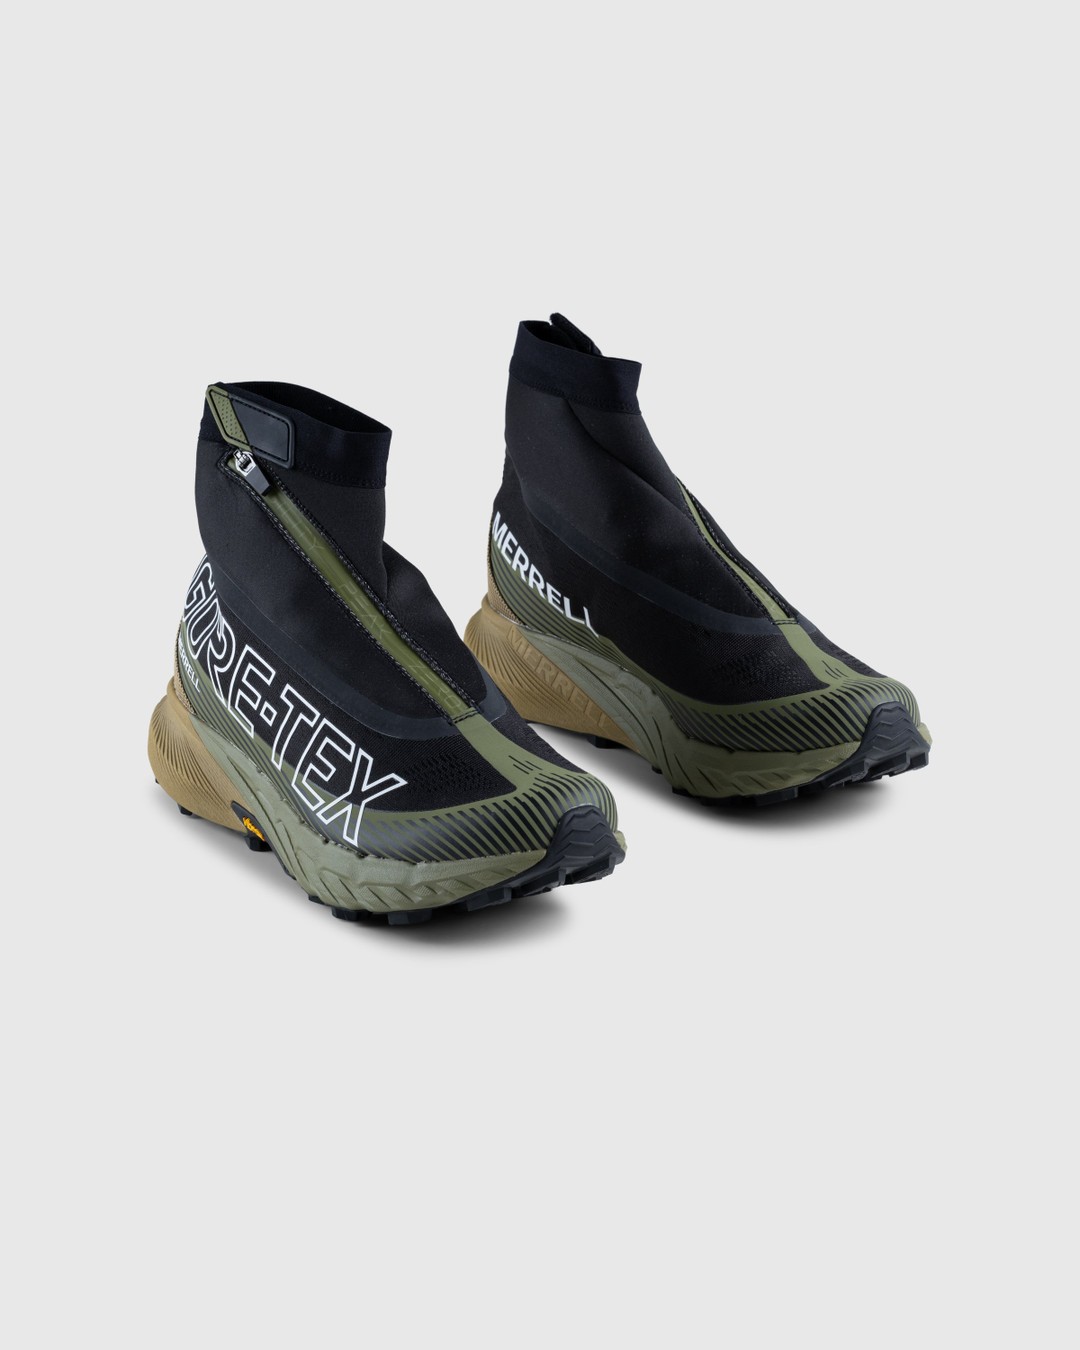 Merrell – Agility Peak 5 Zero GORE-TEX Black/Avocado - Sneakers - Multi - Image 3